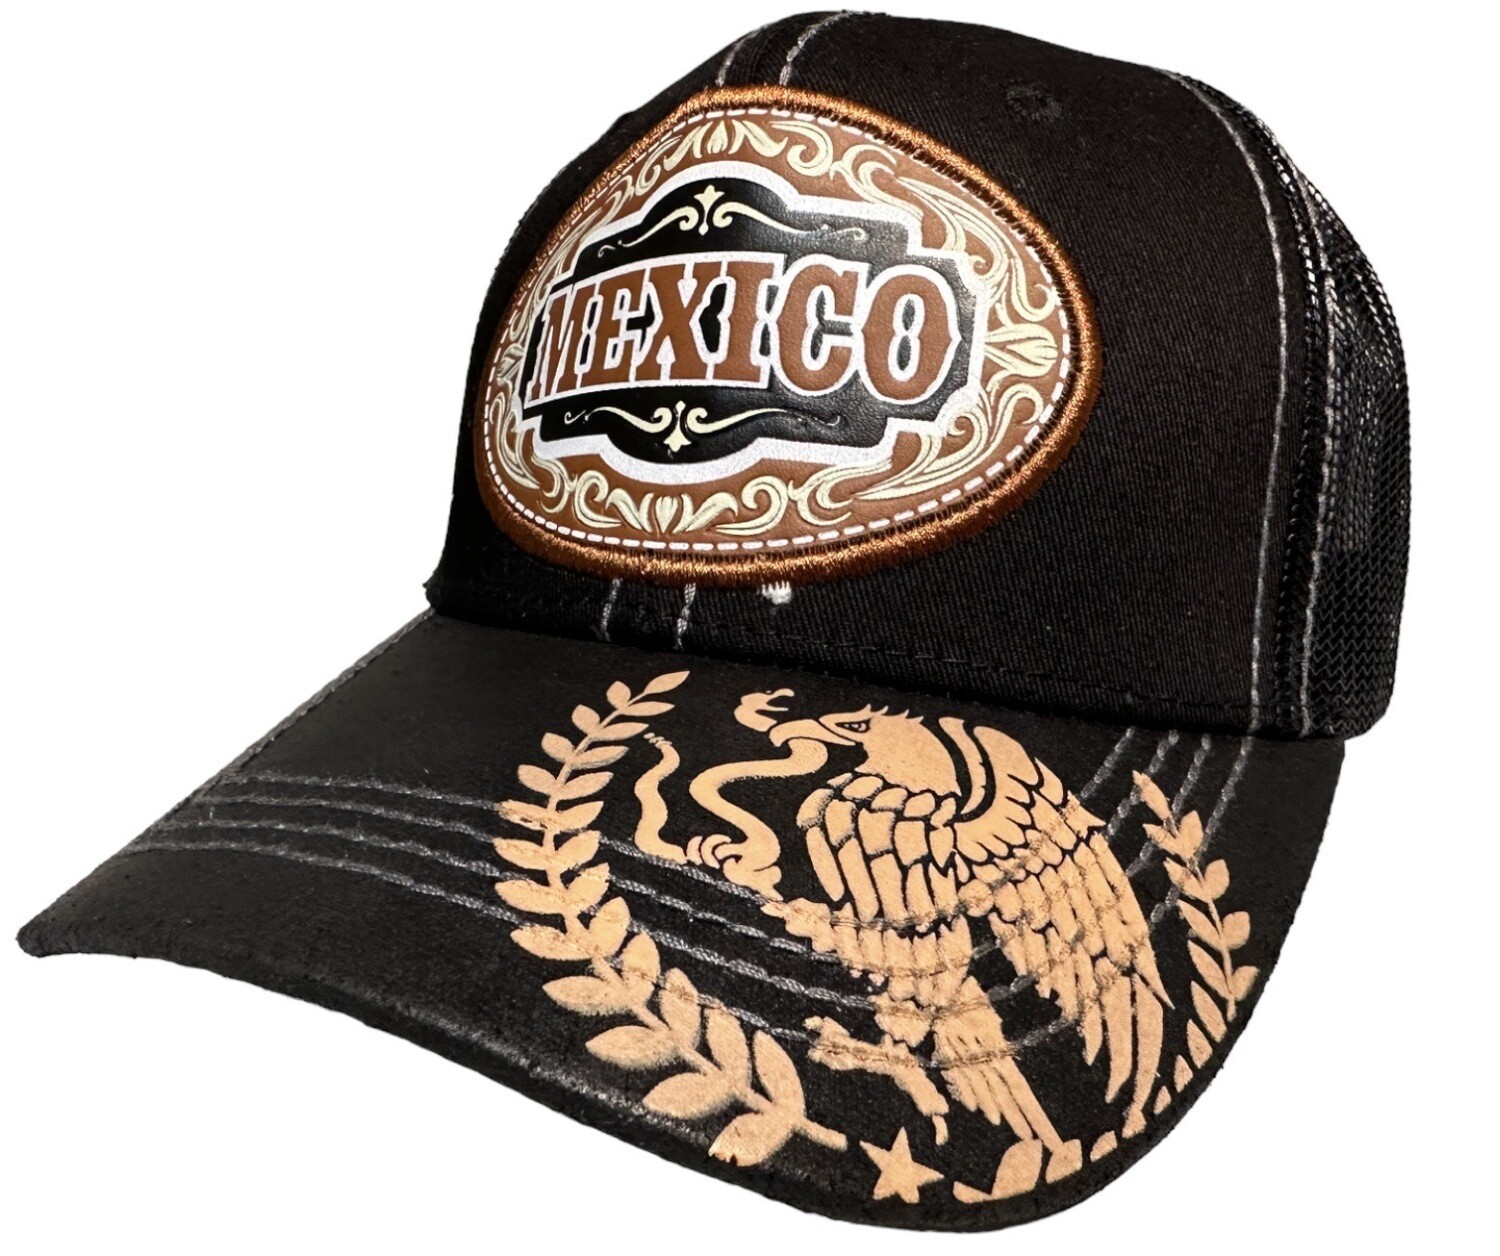 Premium Baseball Caps Mexico California Styles